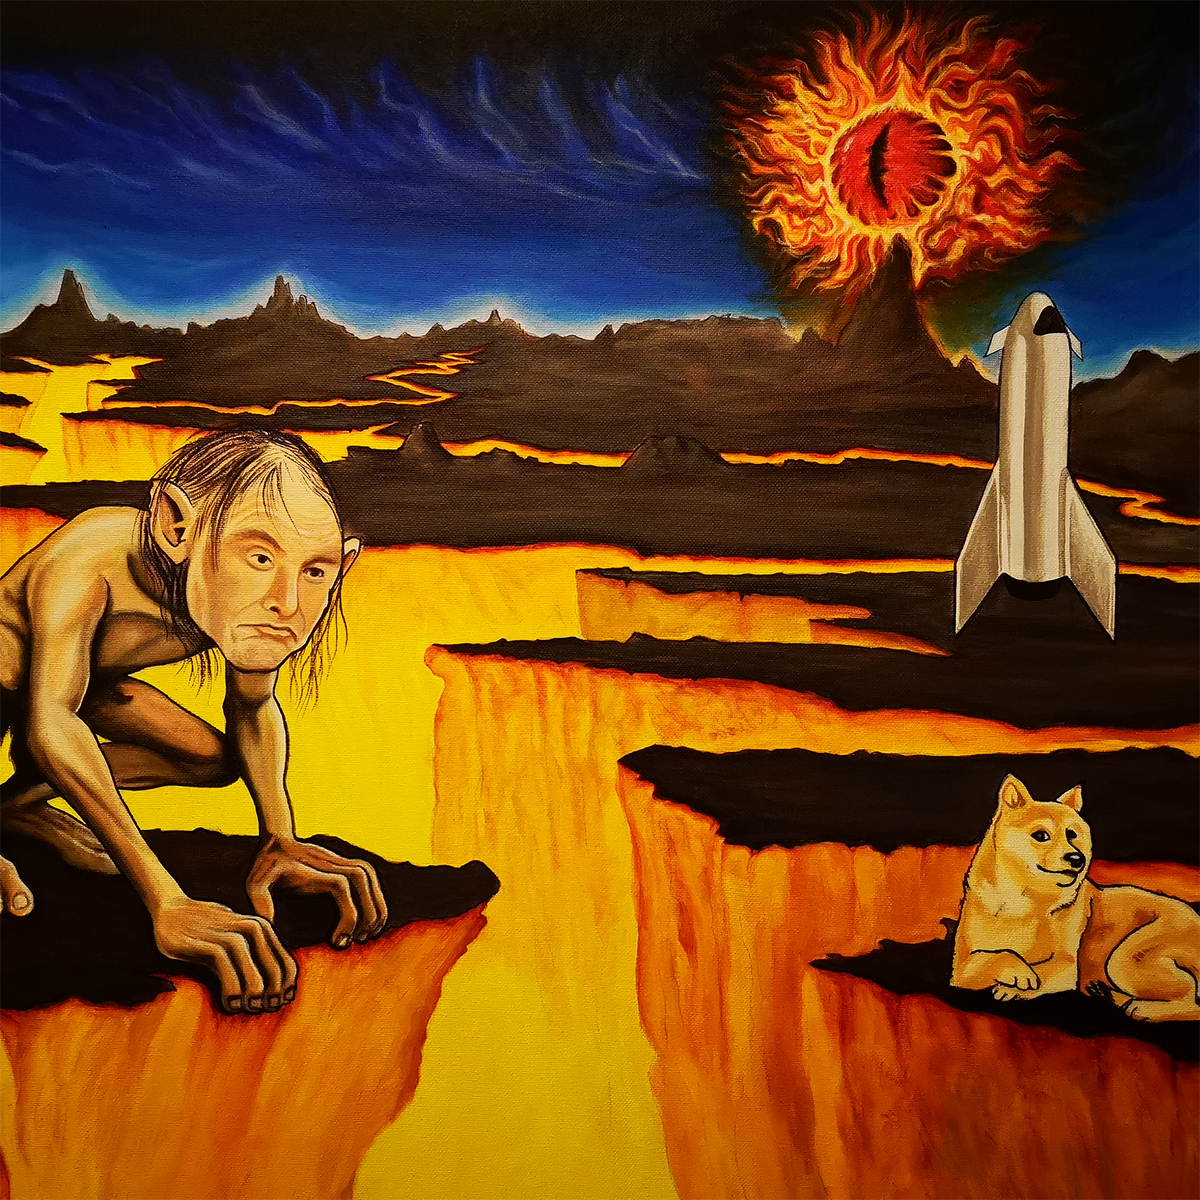 Elon Musk with Doge on Mars 2050